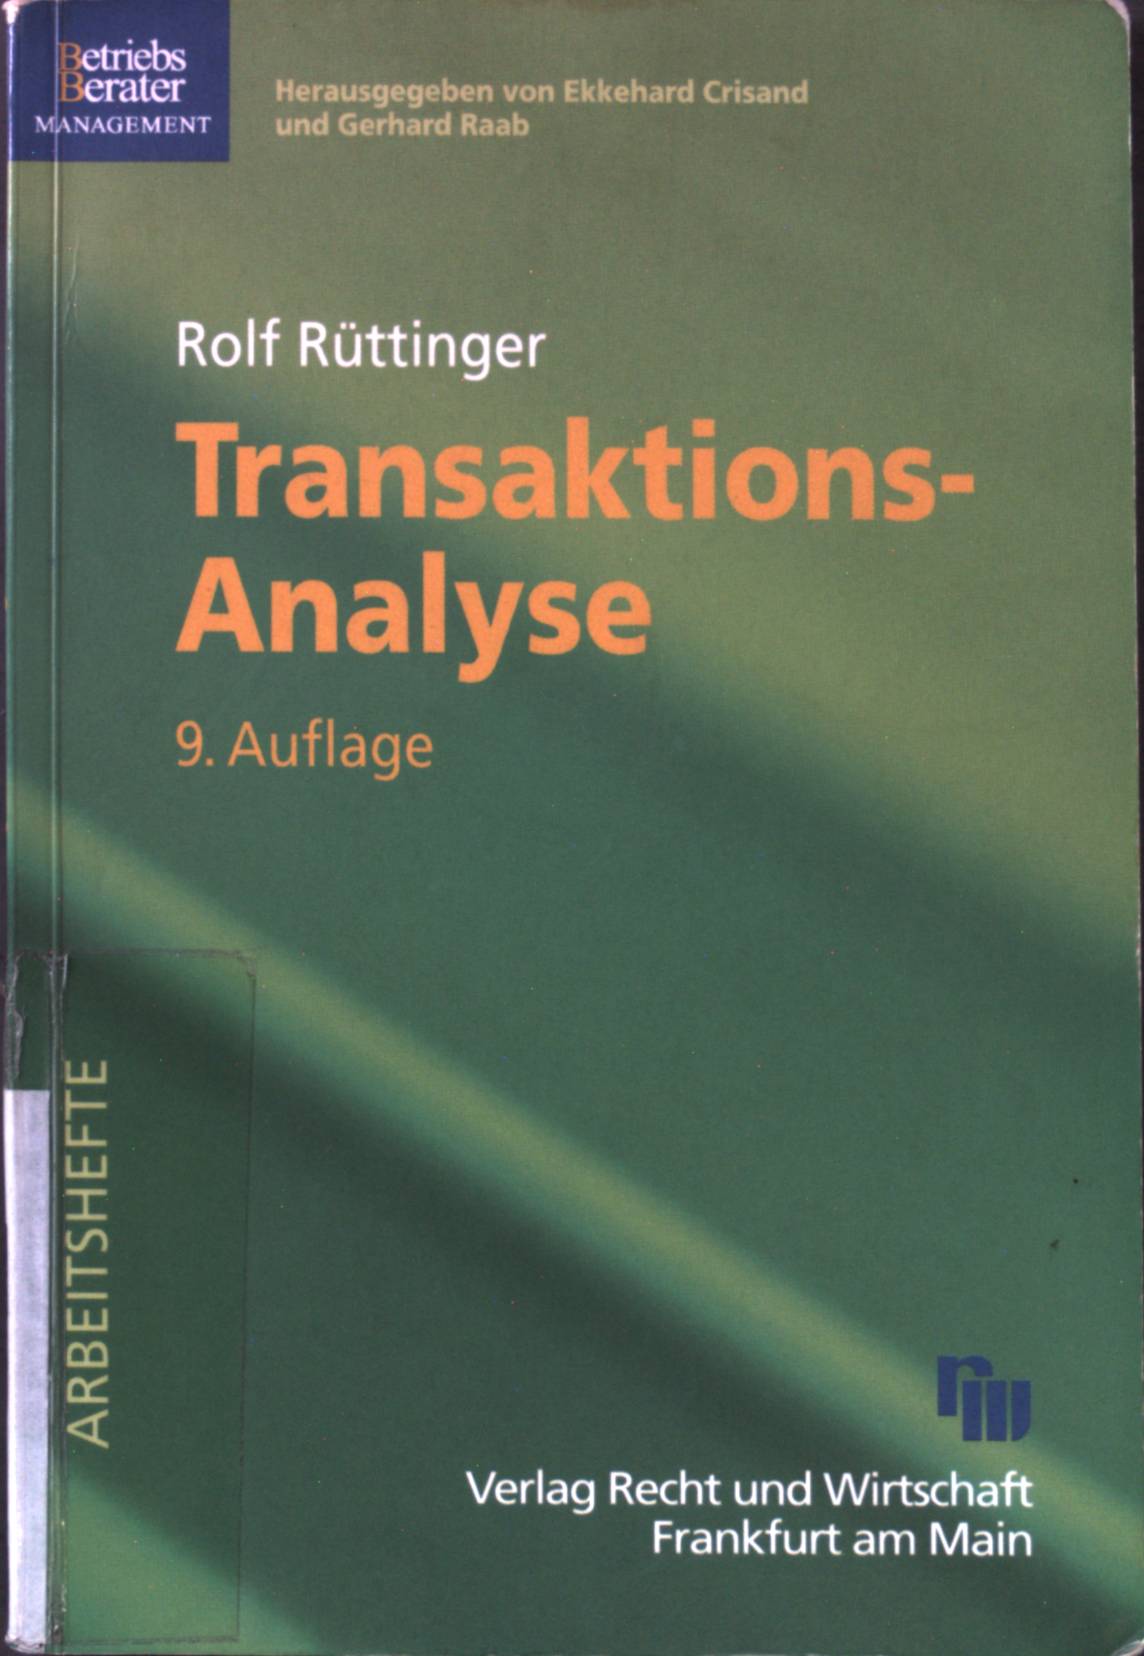 Transaktions-Analyse. Arbeitshefte; Betriebs-Berater : Management - Rüttinger, Rolf